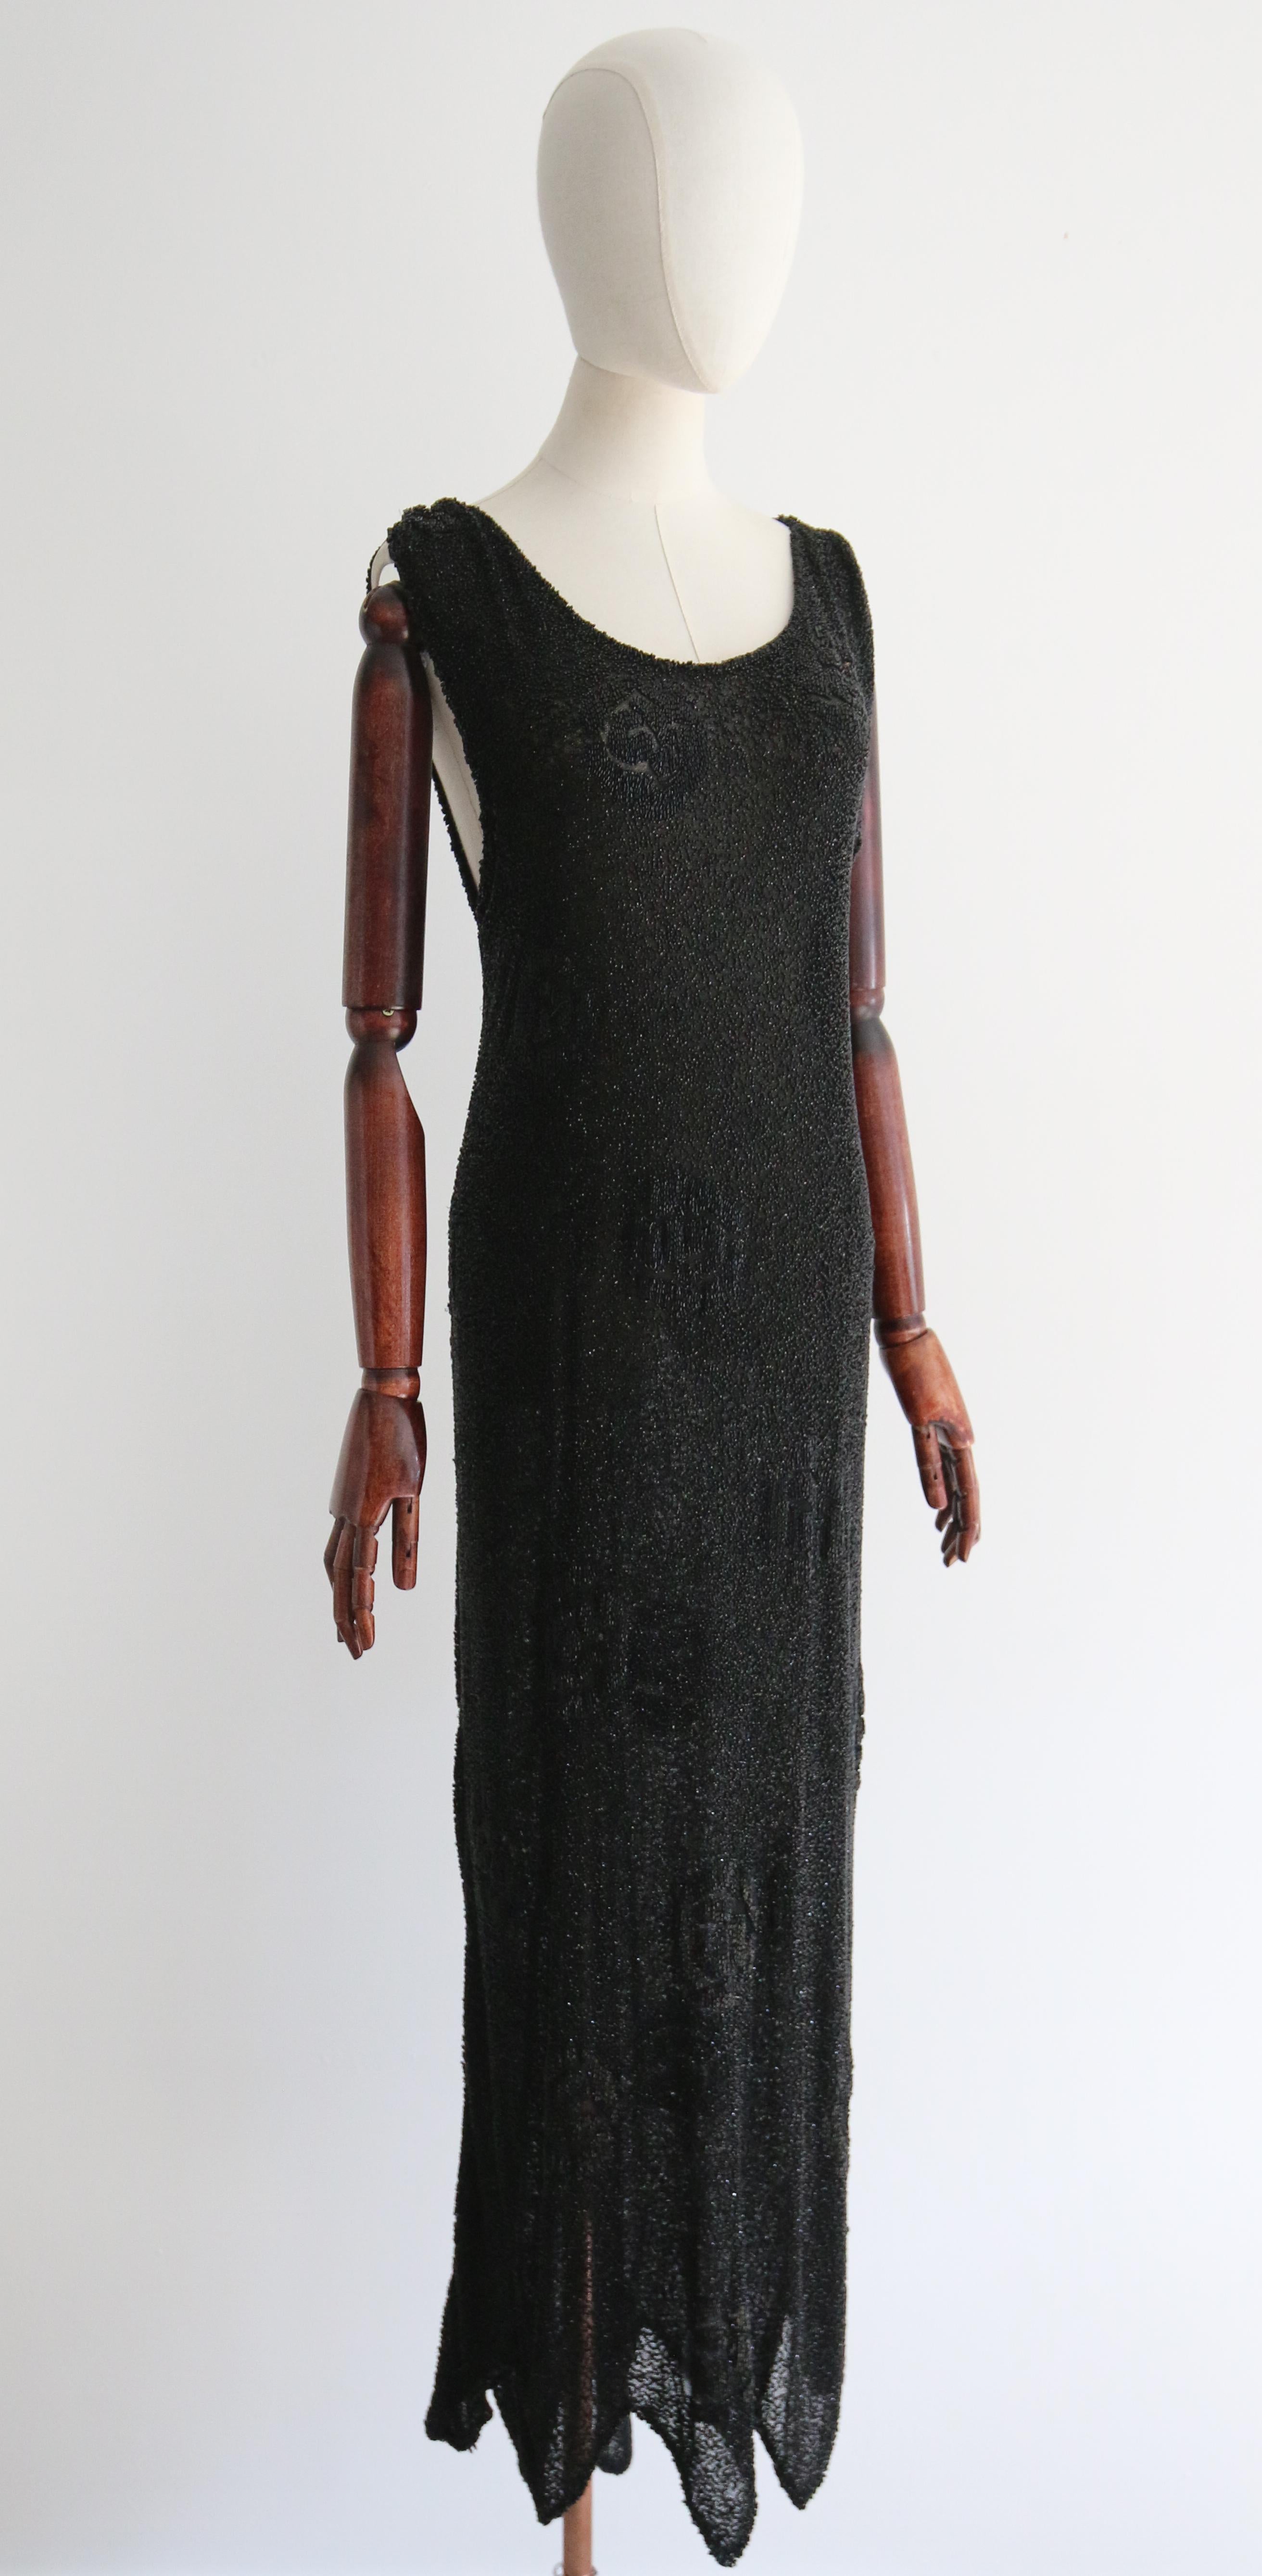 Women's or Men's Vintage 1920's Black Beaded Evening Dress UK 12-14 US 8-10